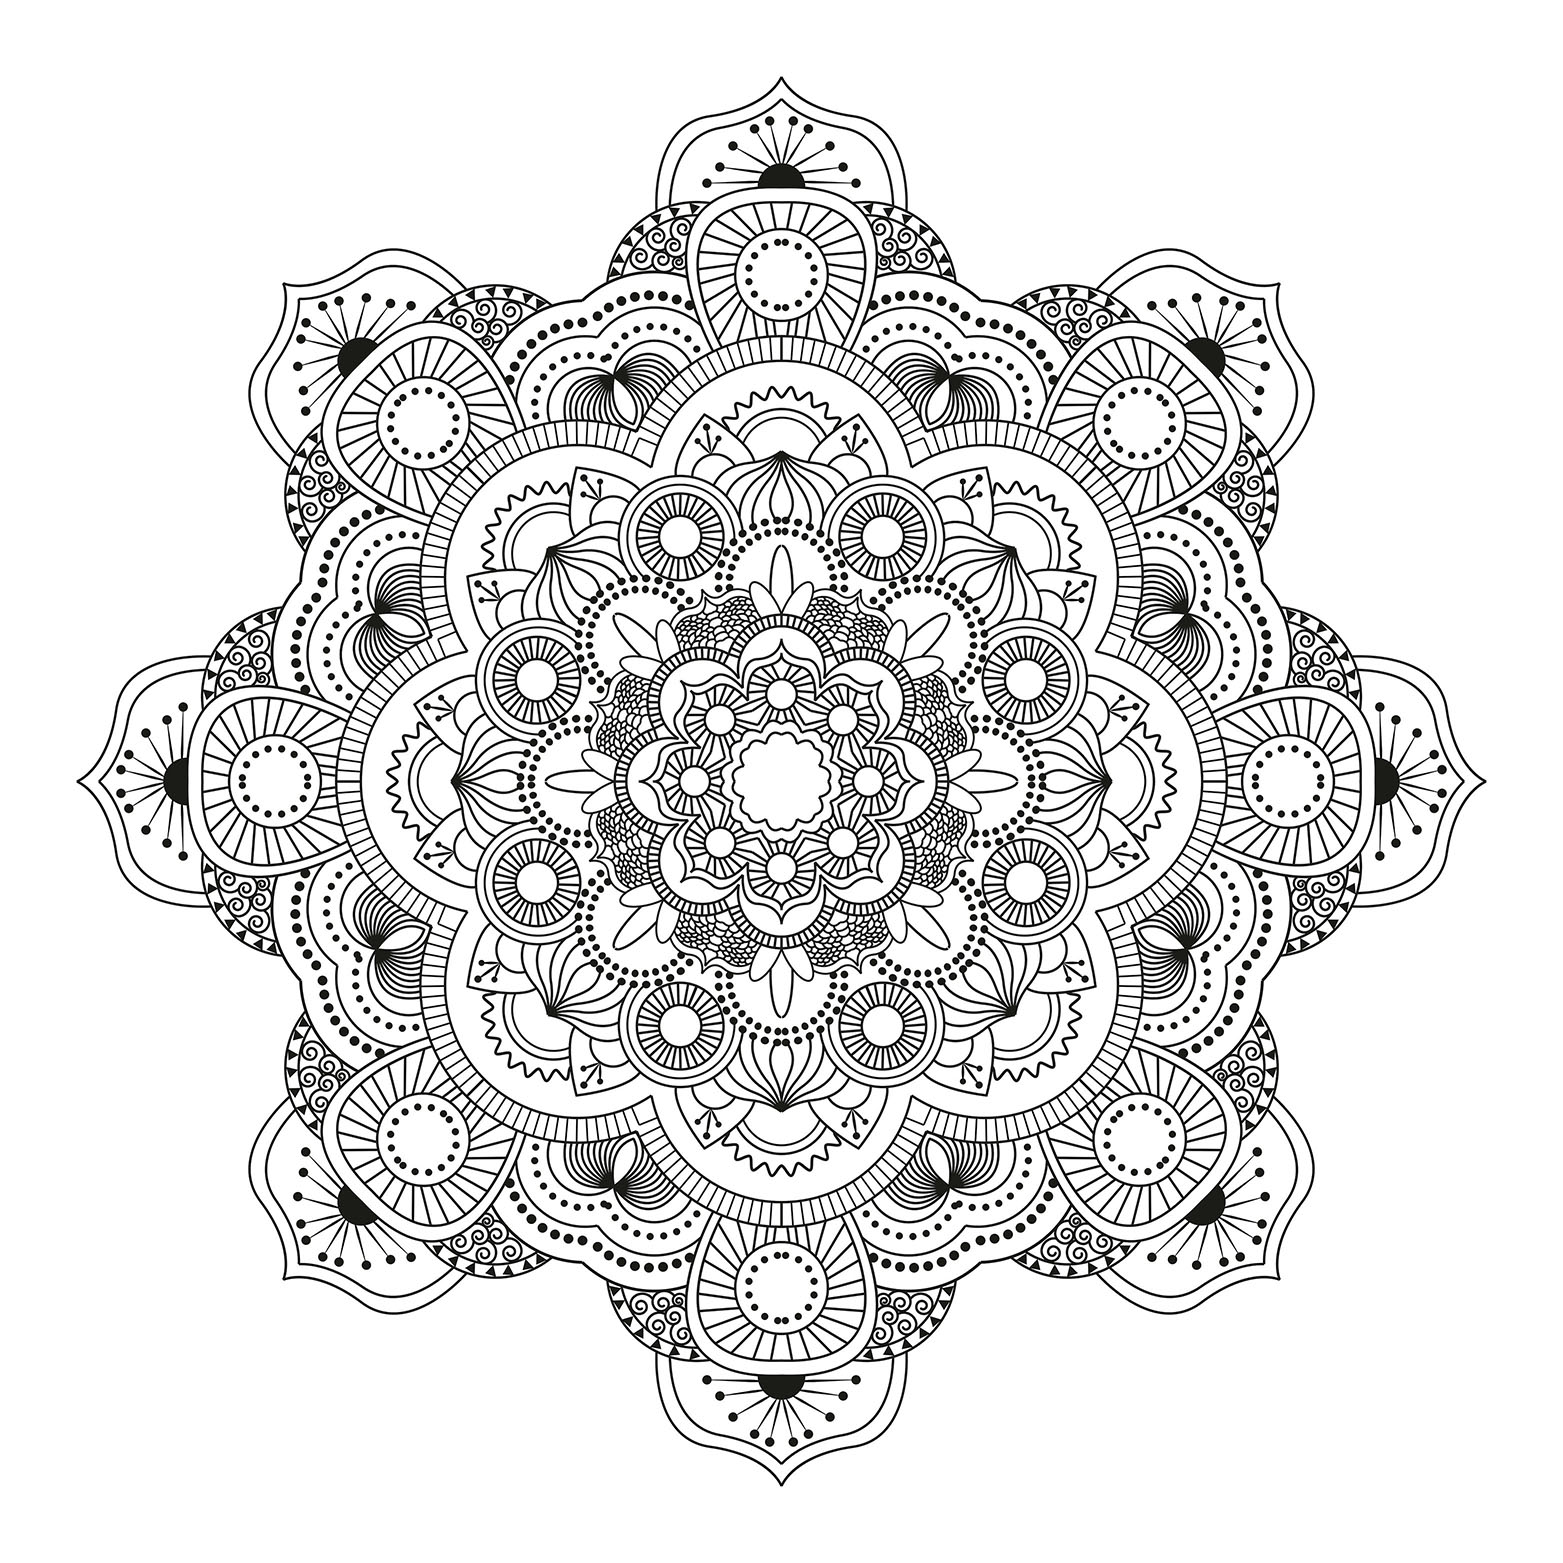 vector art work of mandala black and white pattern 3000x3000 px copy copy min 89